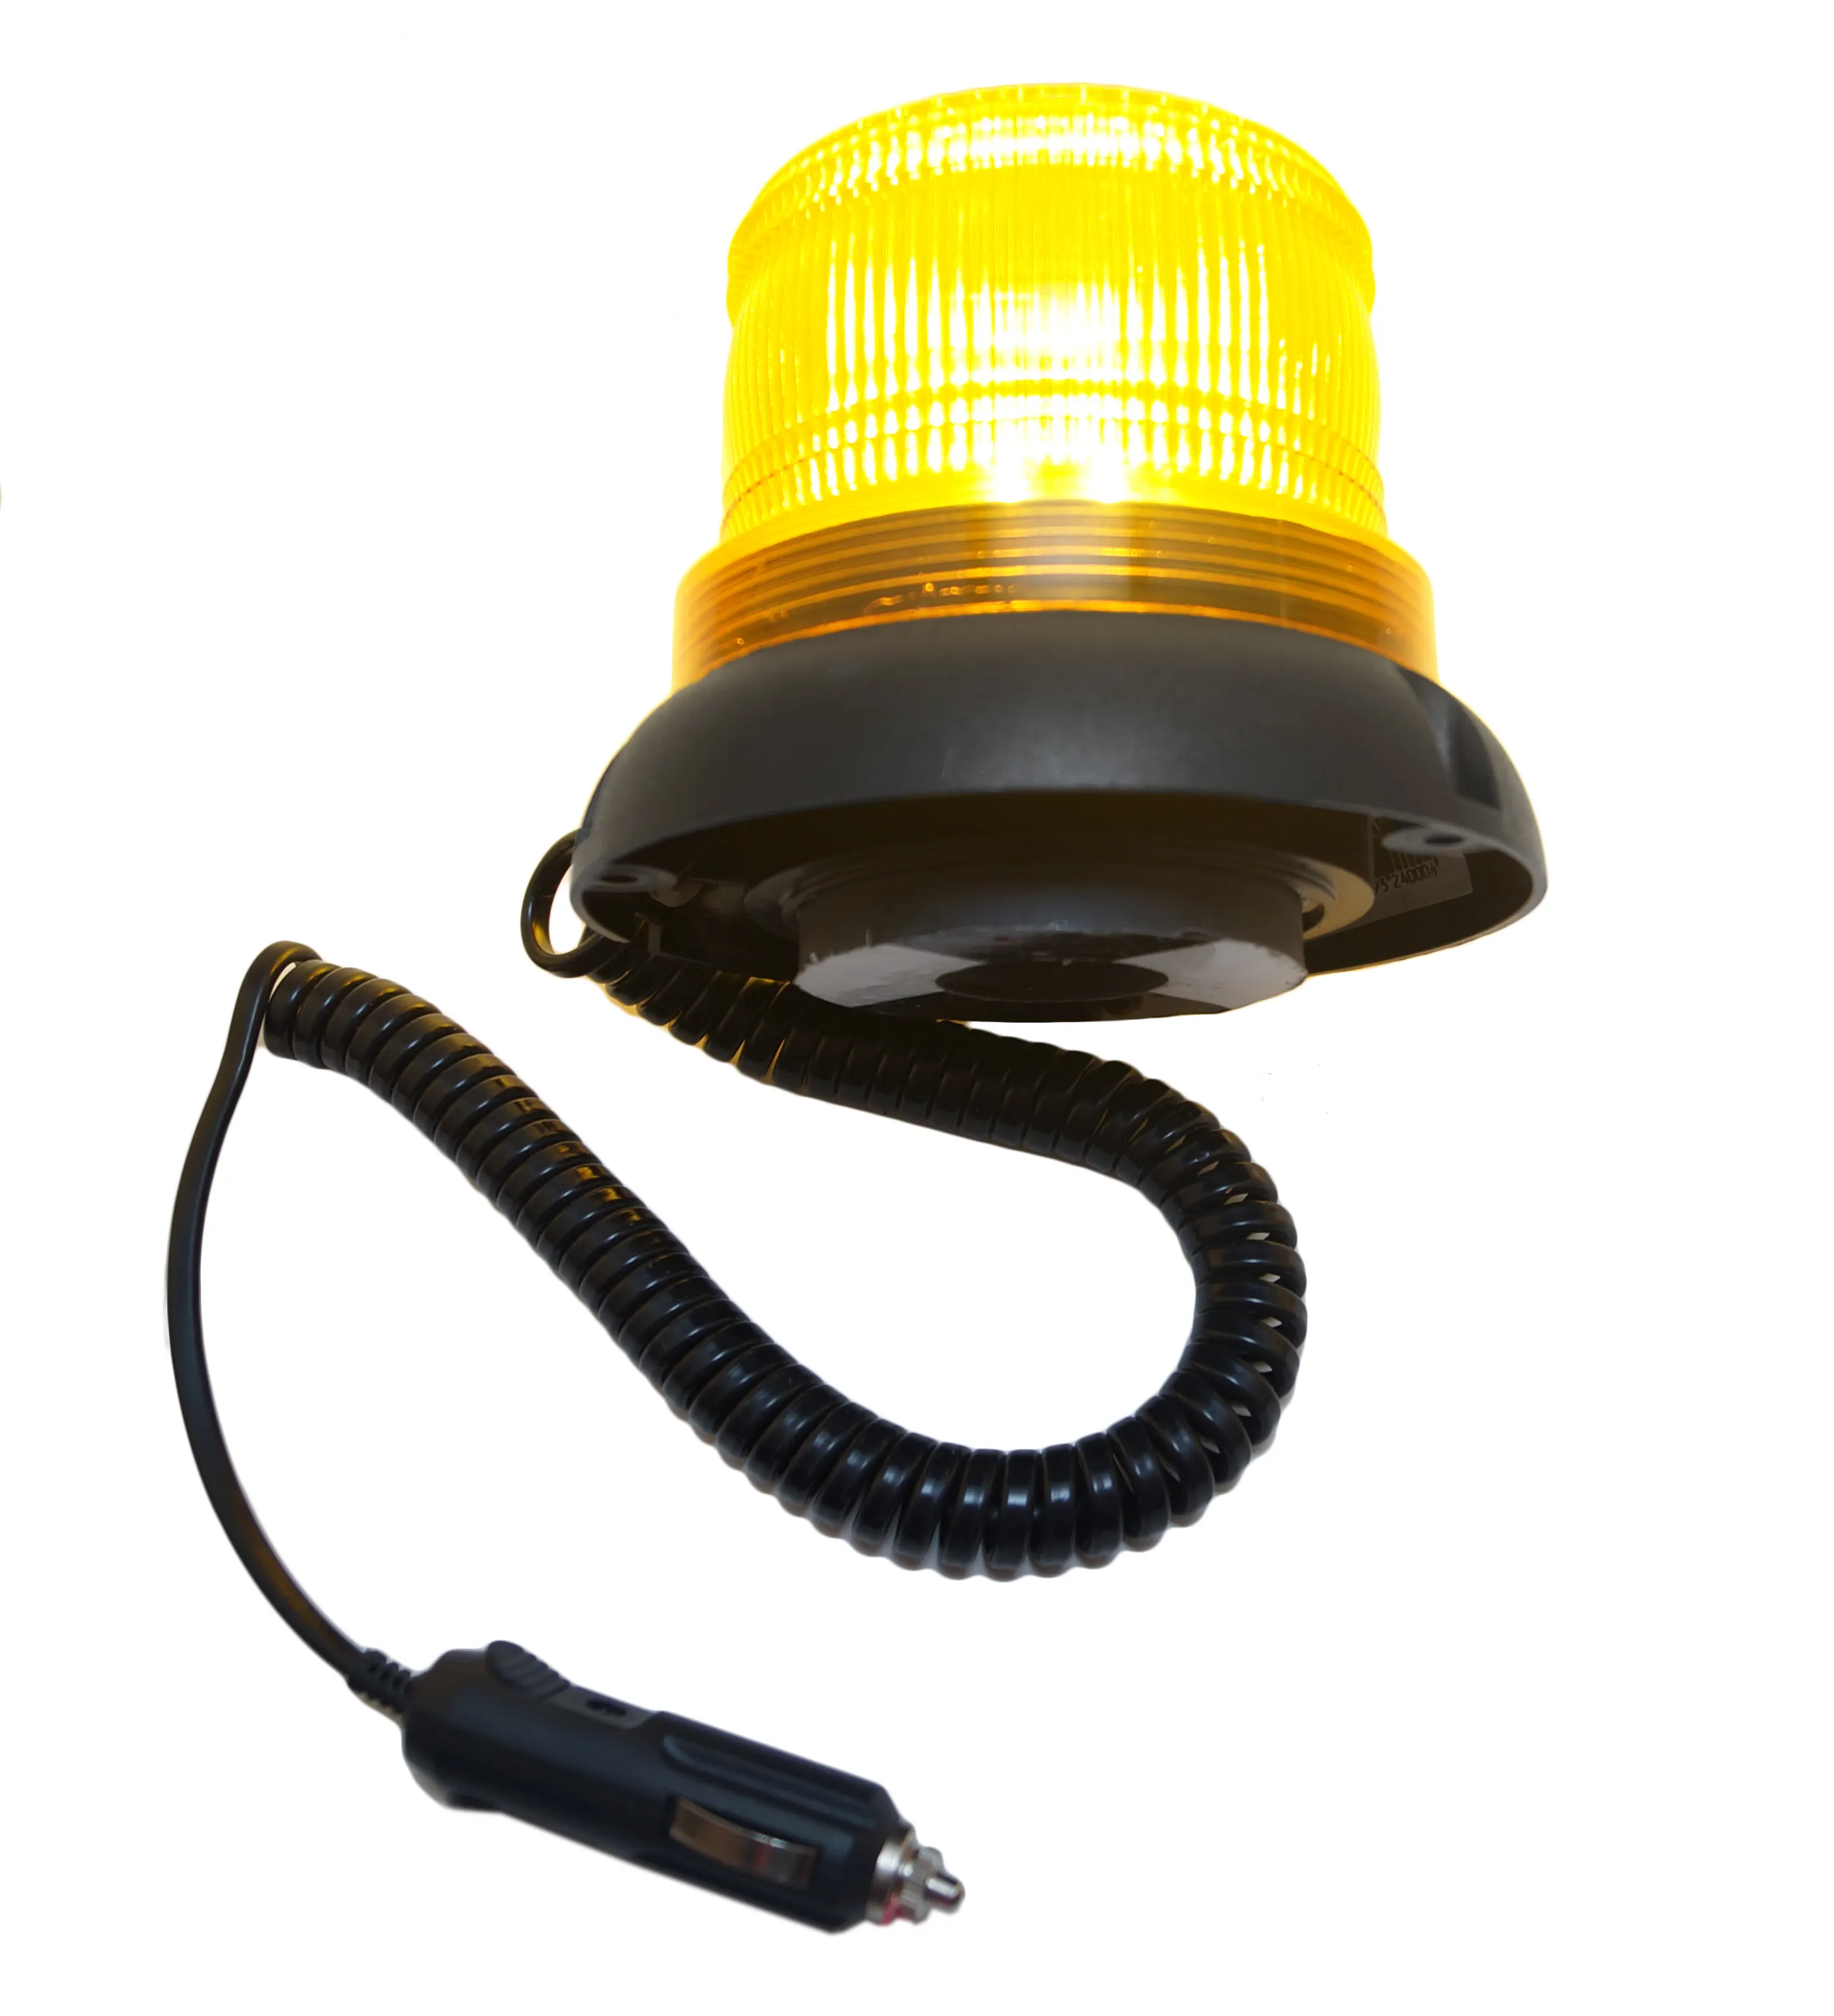 Mesan MS 733 SMD LED Warning Beacon Multifunction Light Base Magnet Mount Warning Light Car Plug IP 65 Protection Rate